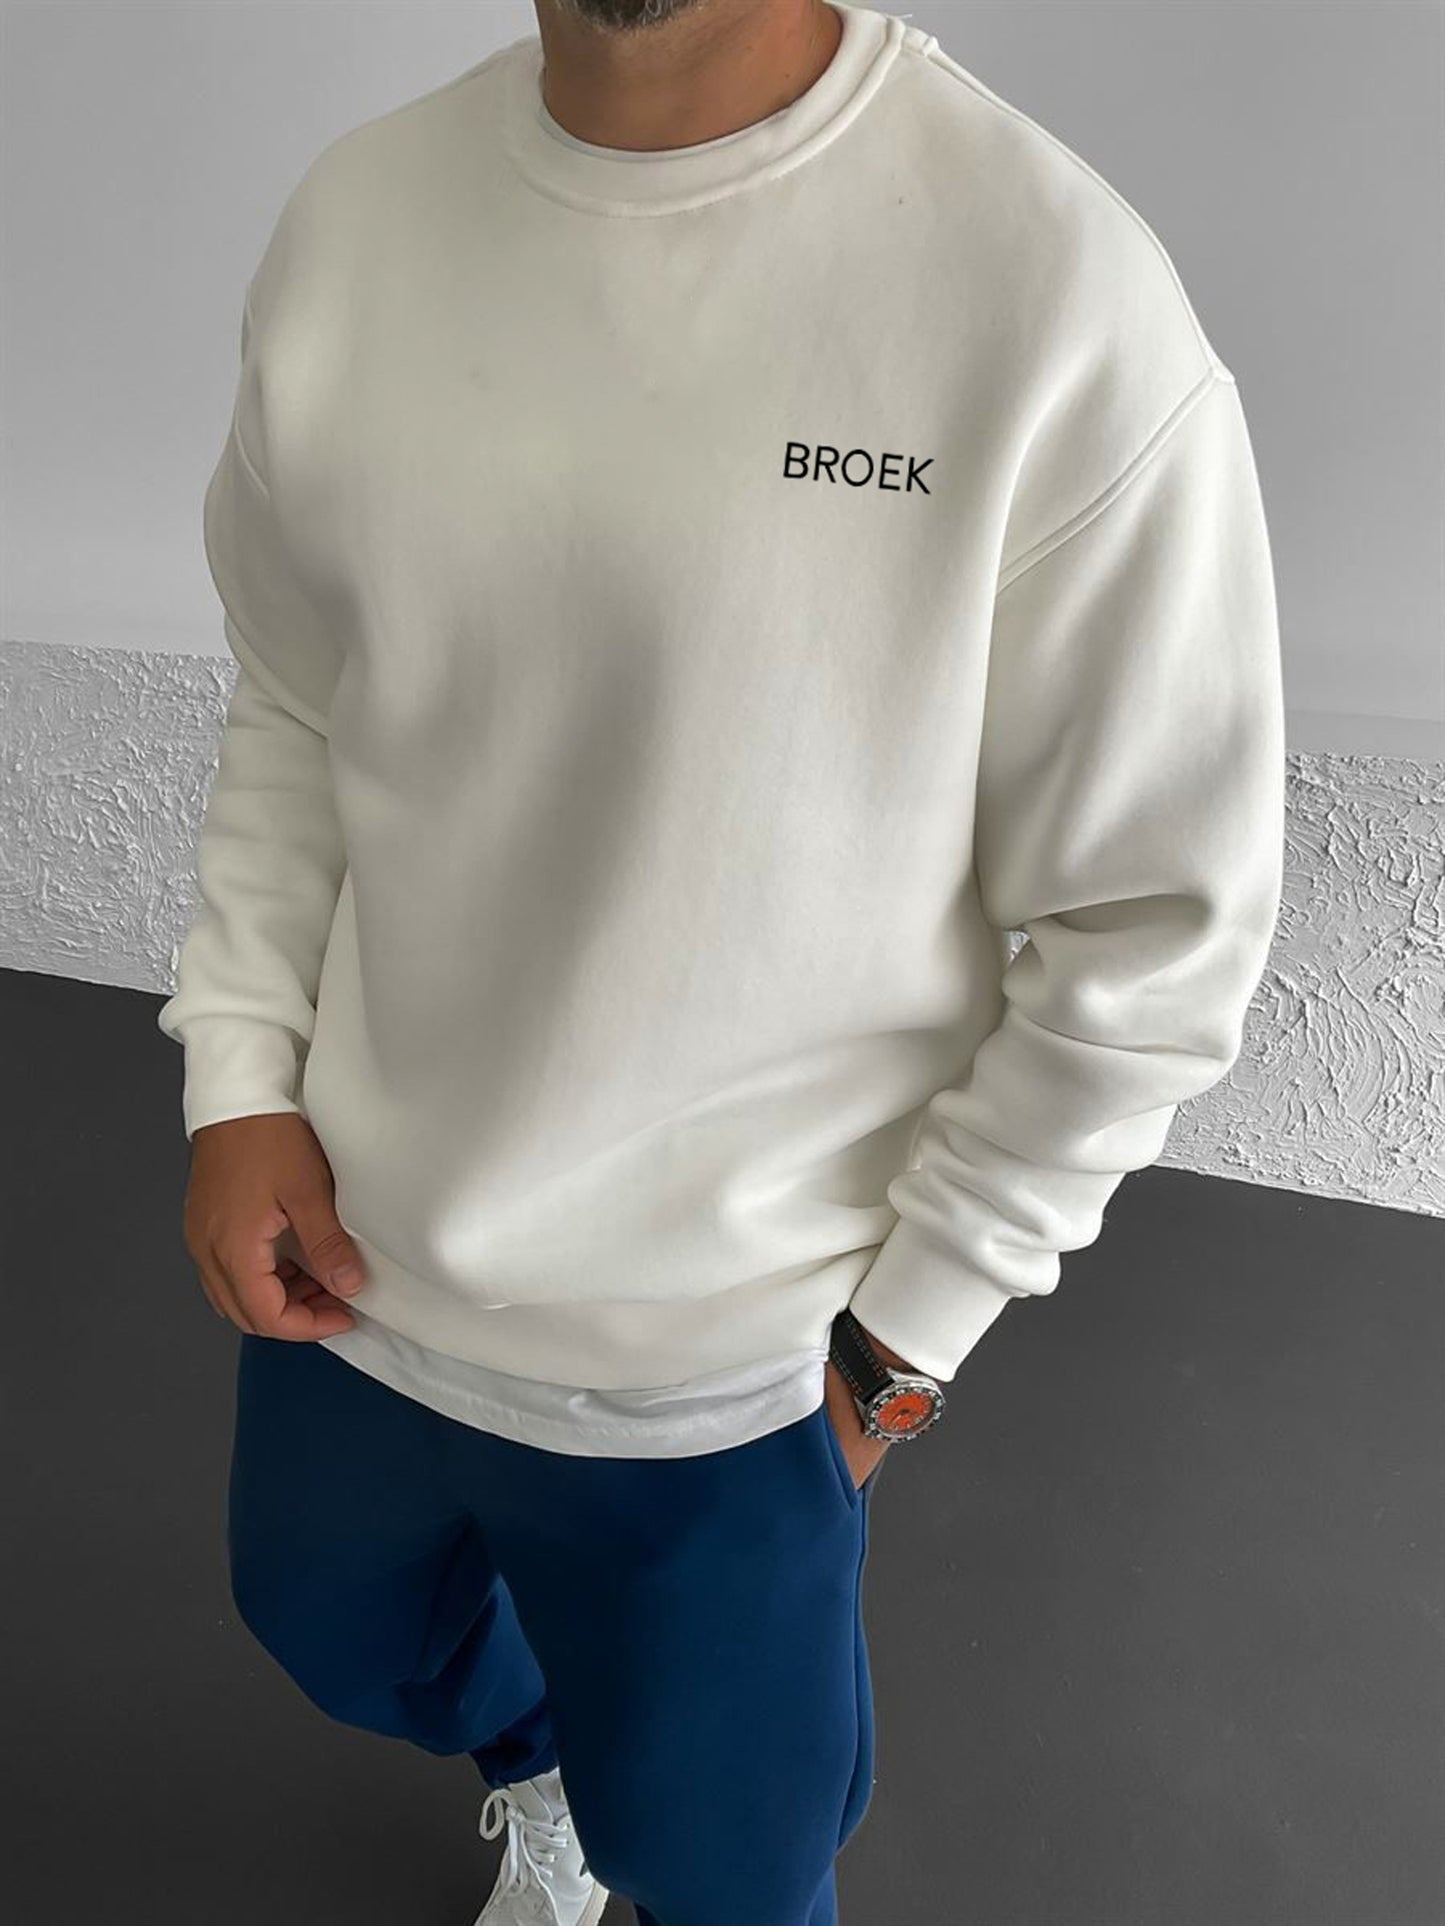 Off-White "Love" Printed Oversize Sweatshirt